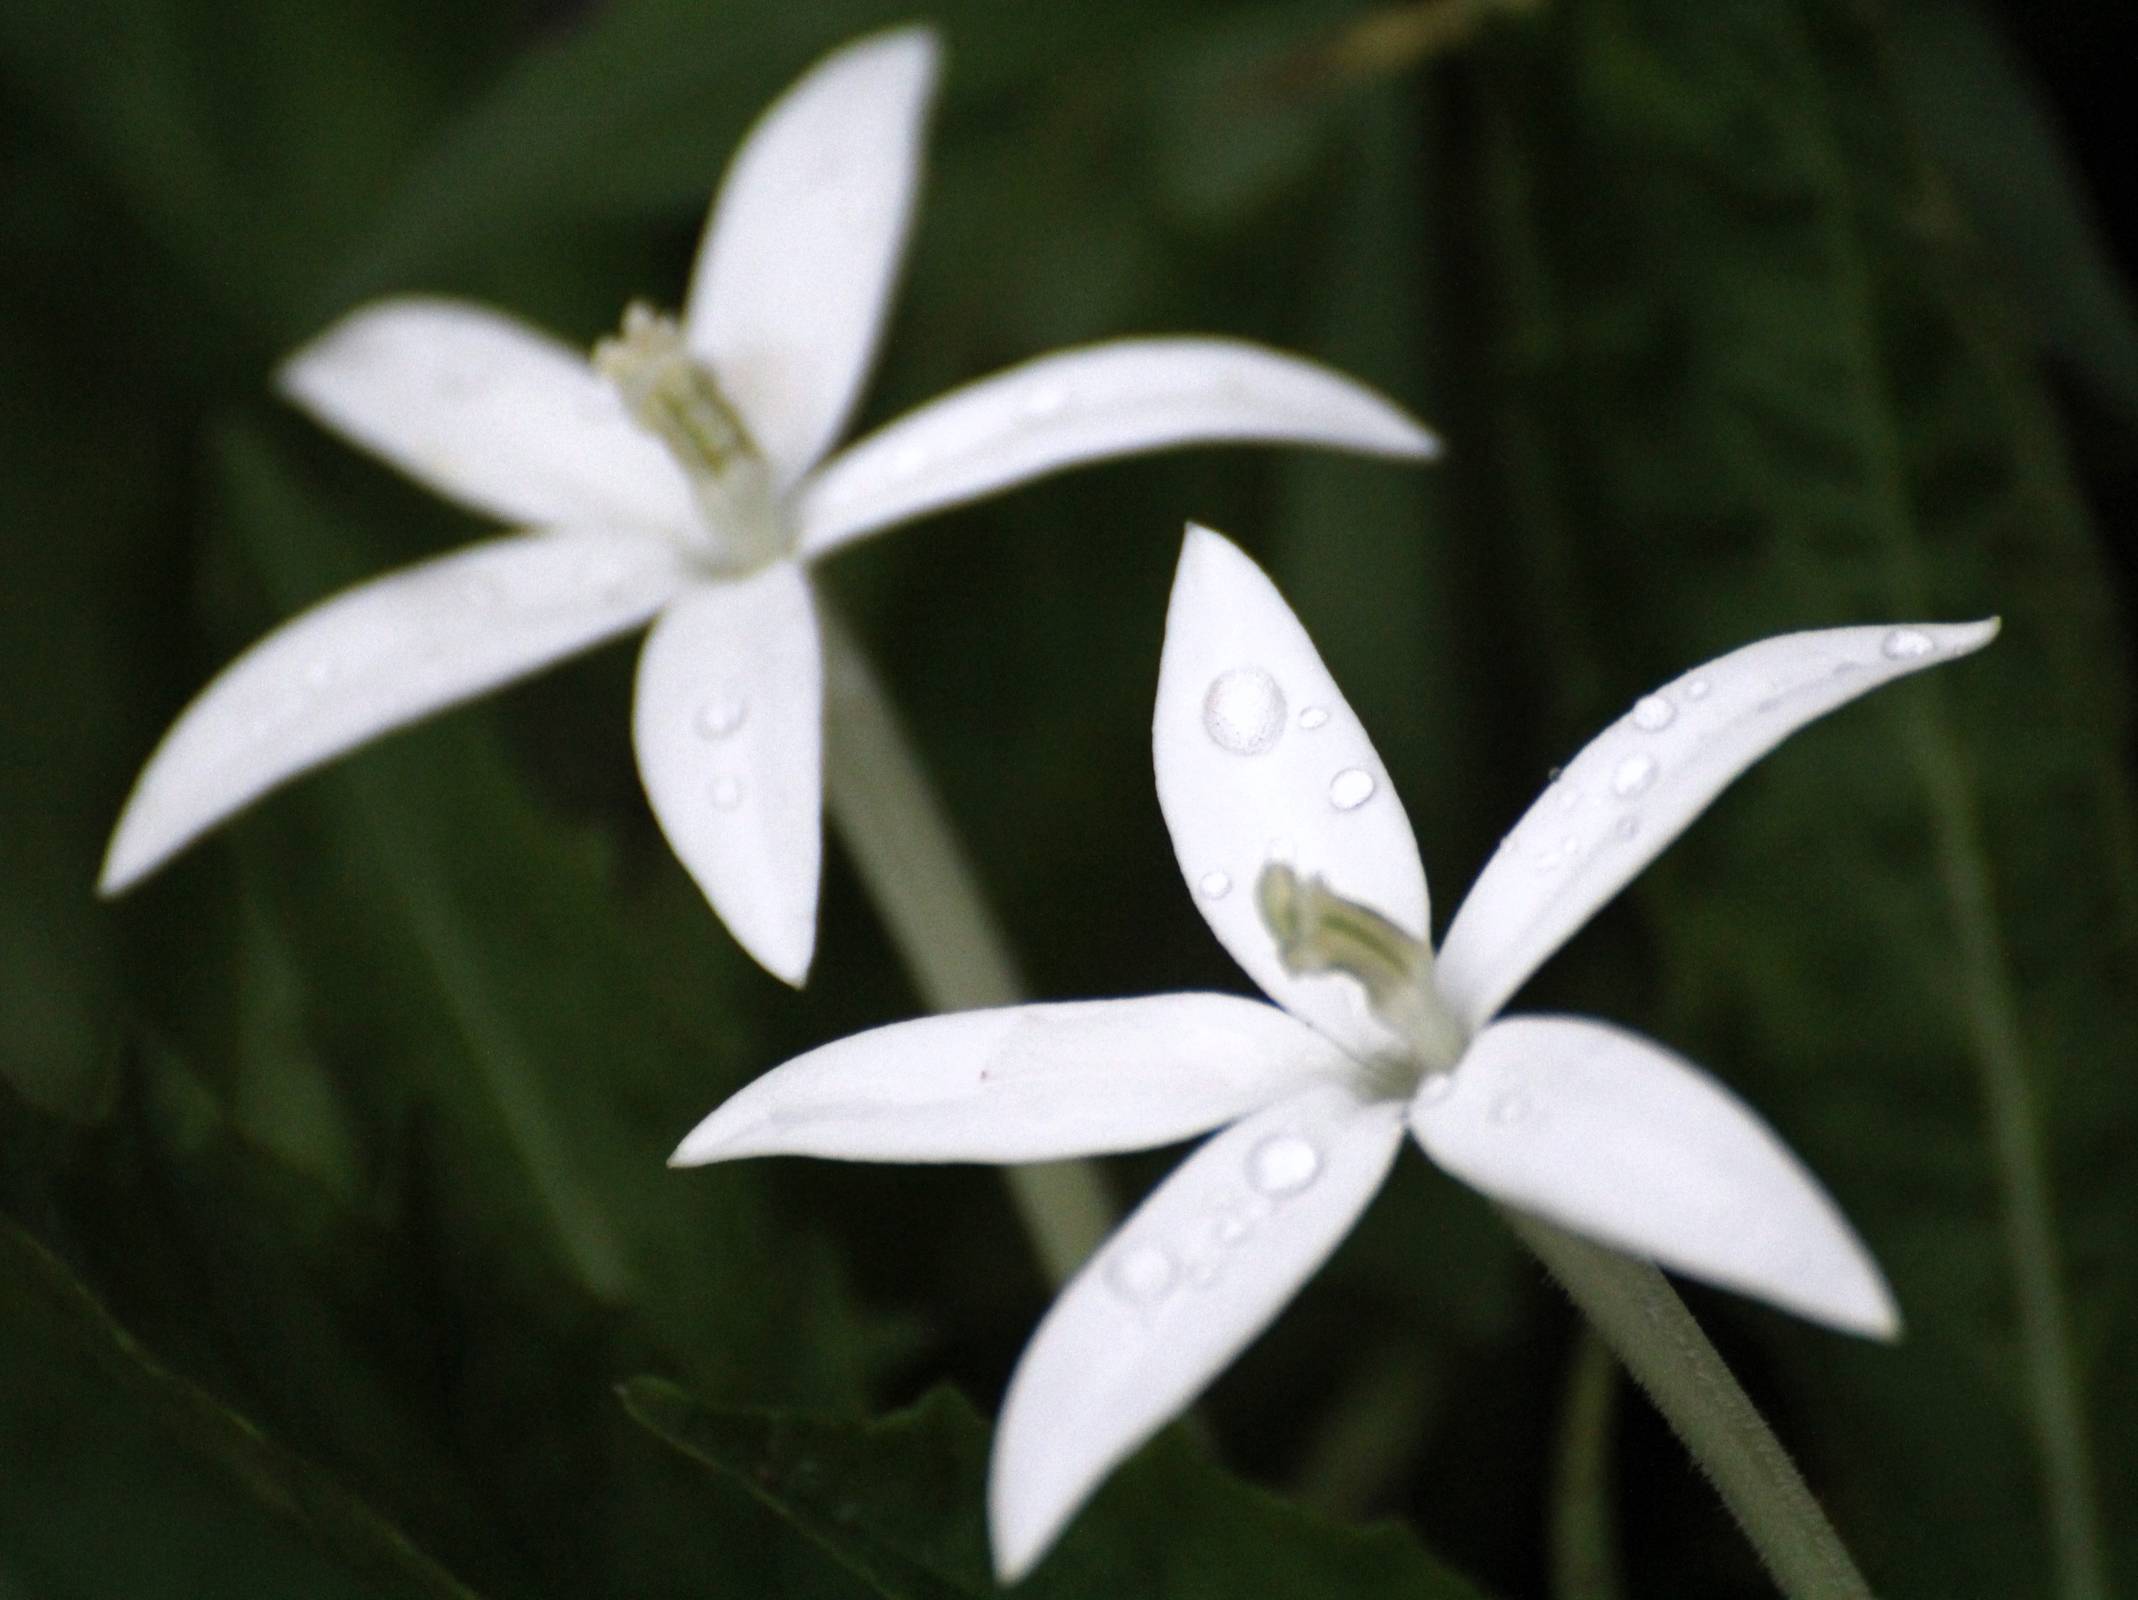 identification - Identifying this white wildflower - Gardening ...